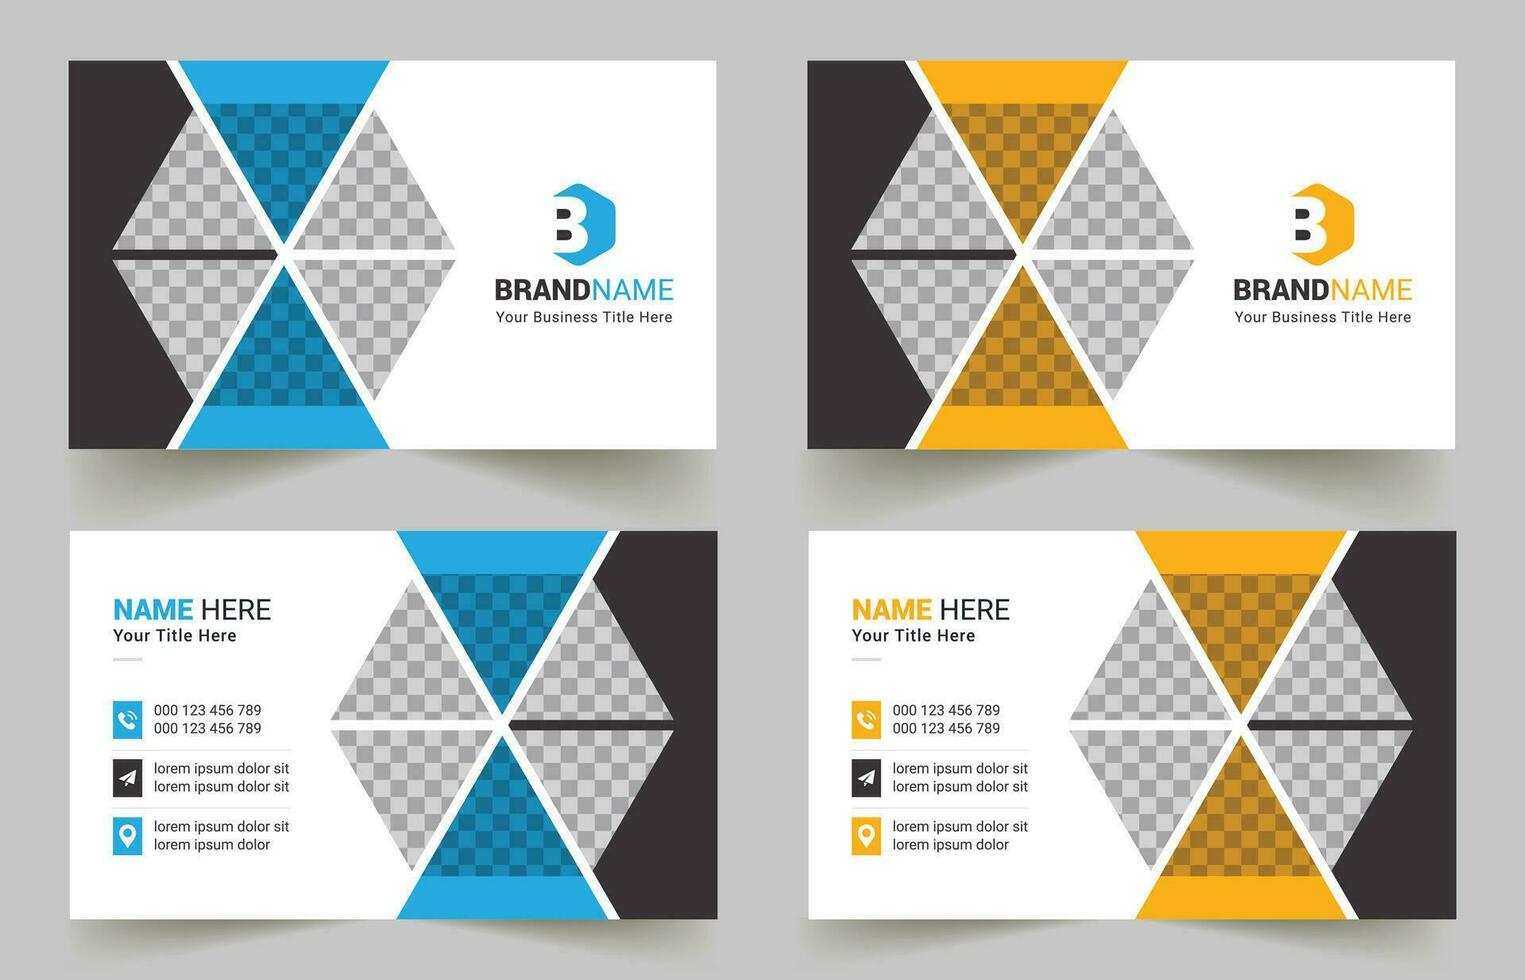 Modern business card design template, corporate business card template, Clean professional business card vector